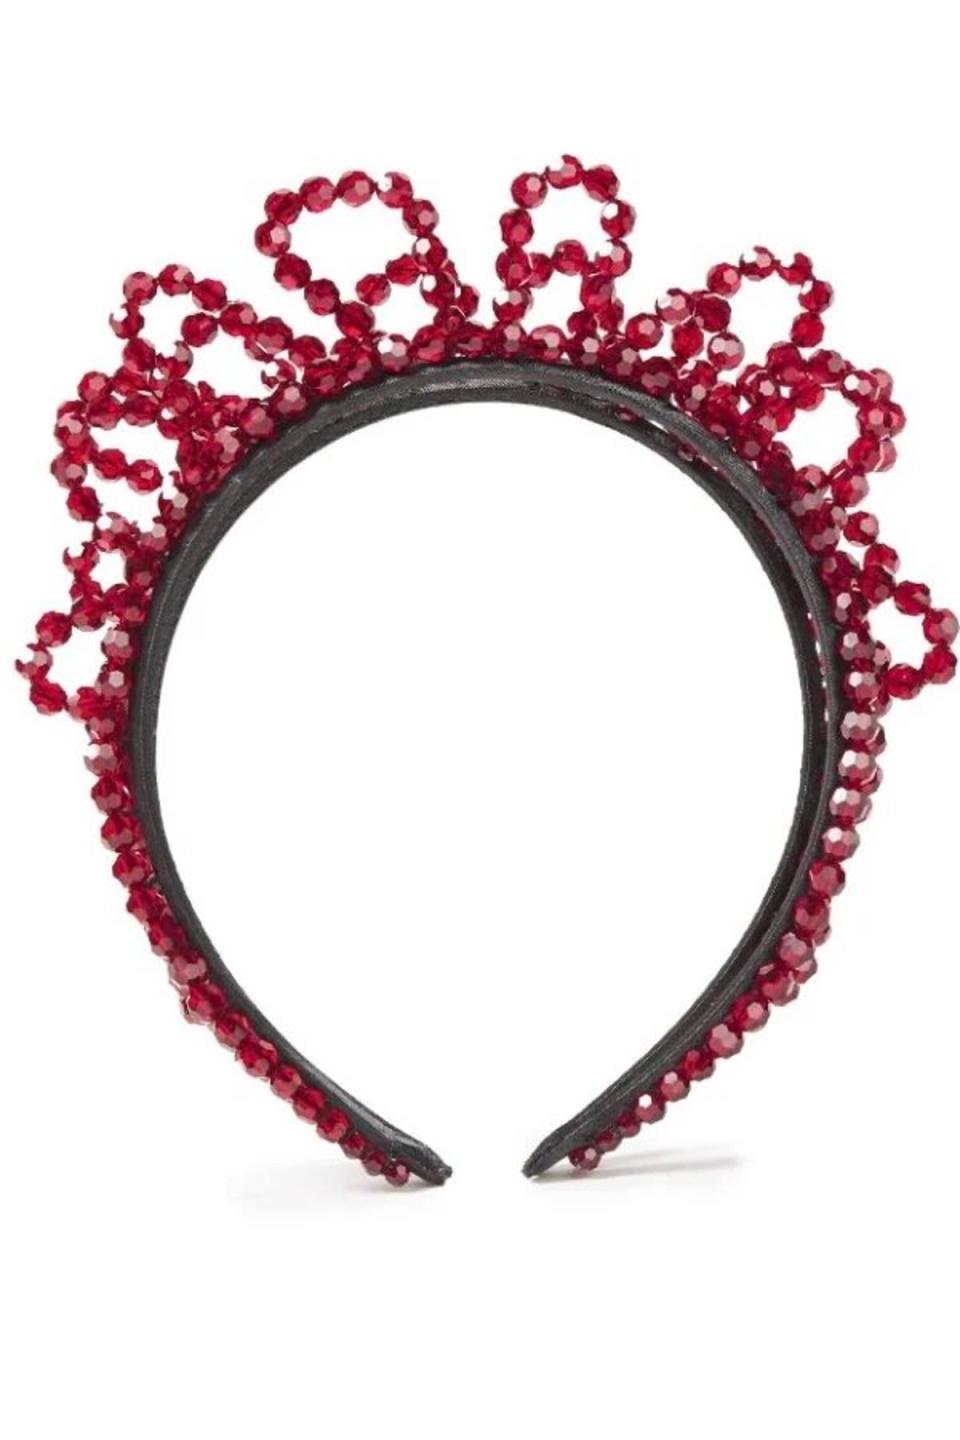 Simone Rocha headband, rent from £62.10, Hurrcollective.com (Hurr Collective)